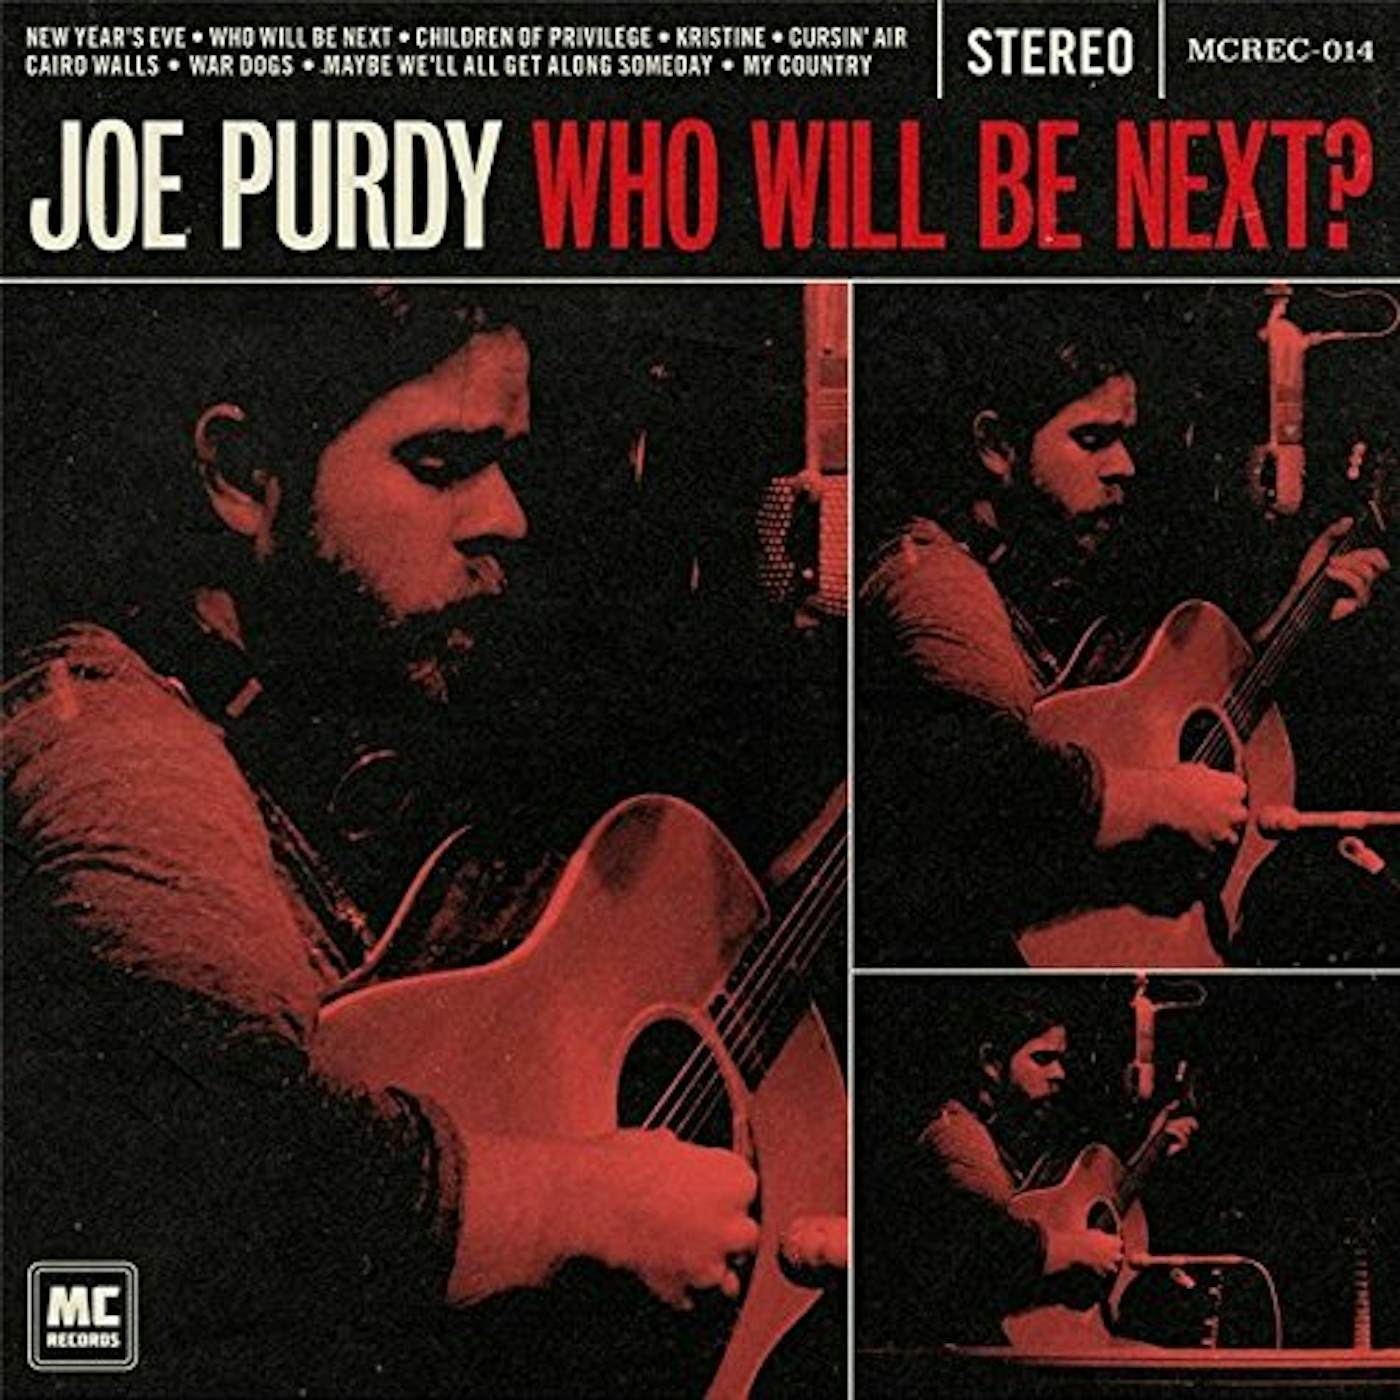 Joe Purdy WHO WILL BE NEXT CD